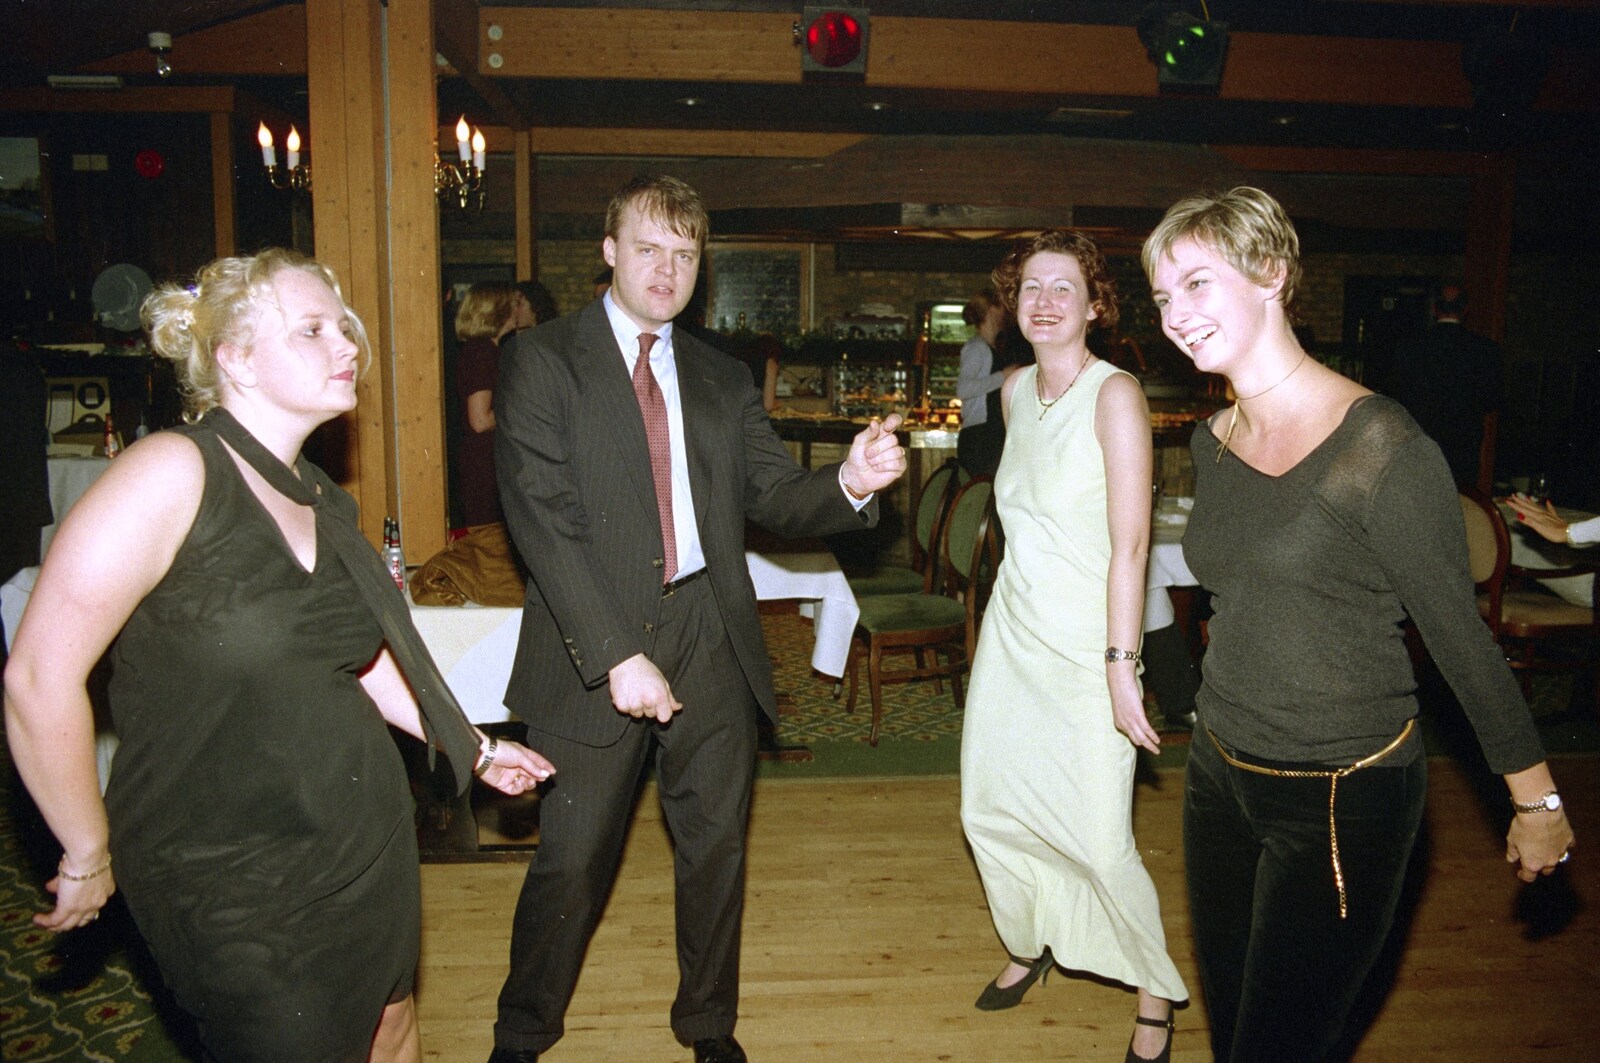 More 3G Lab dancing from Paula's 3G Lab Wedding Reception, Huntingdon, Cambridgeshire - 4th September 2000